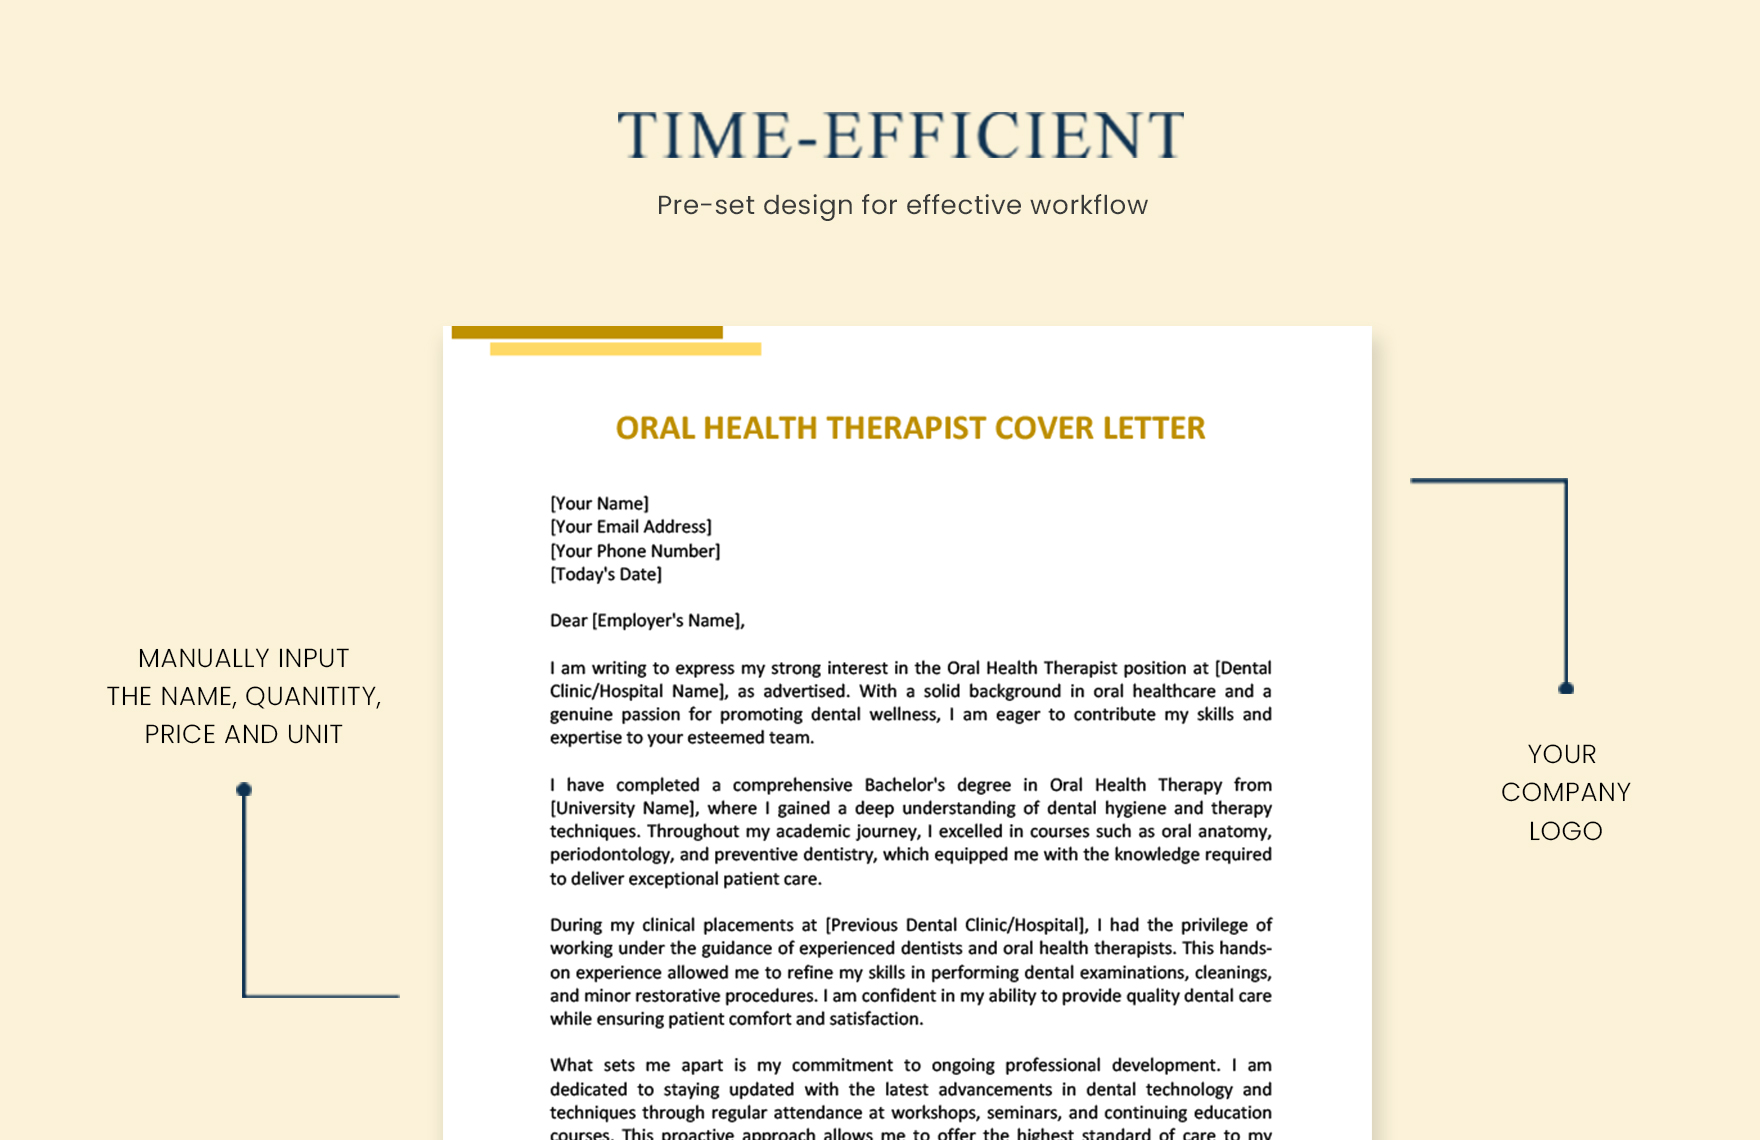 Oral Health Therapist Cover Letter